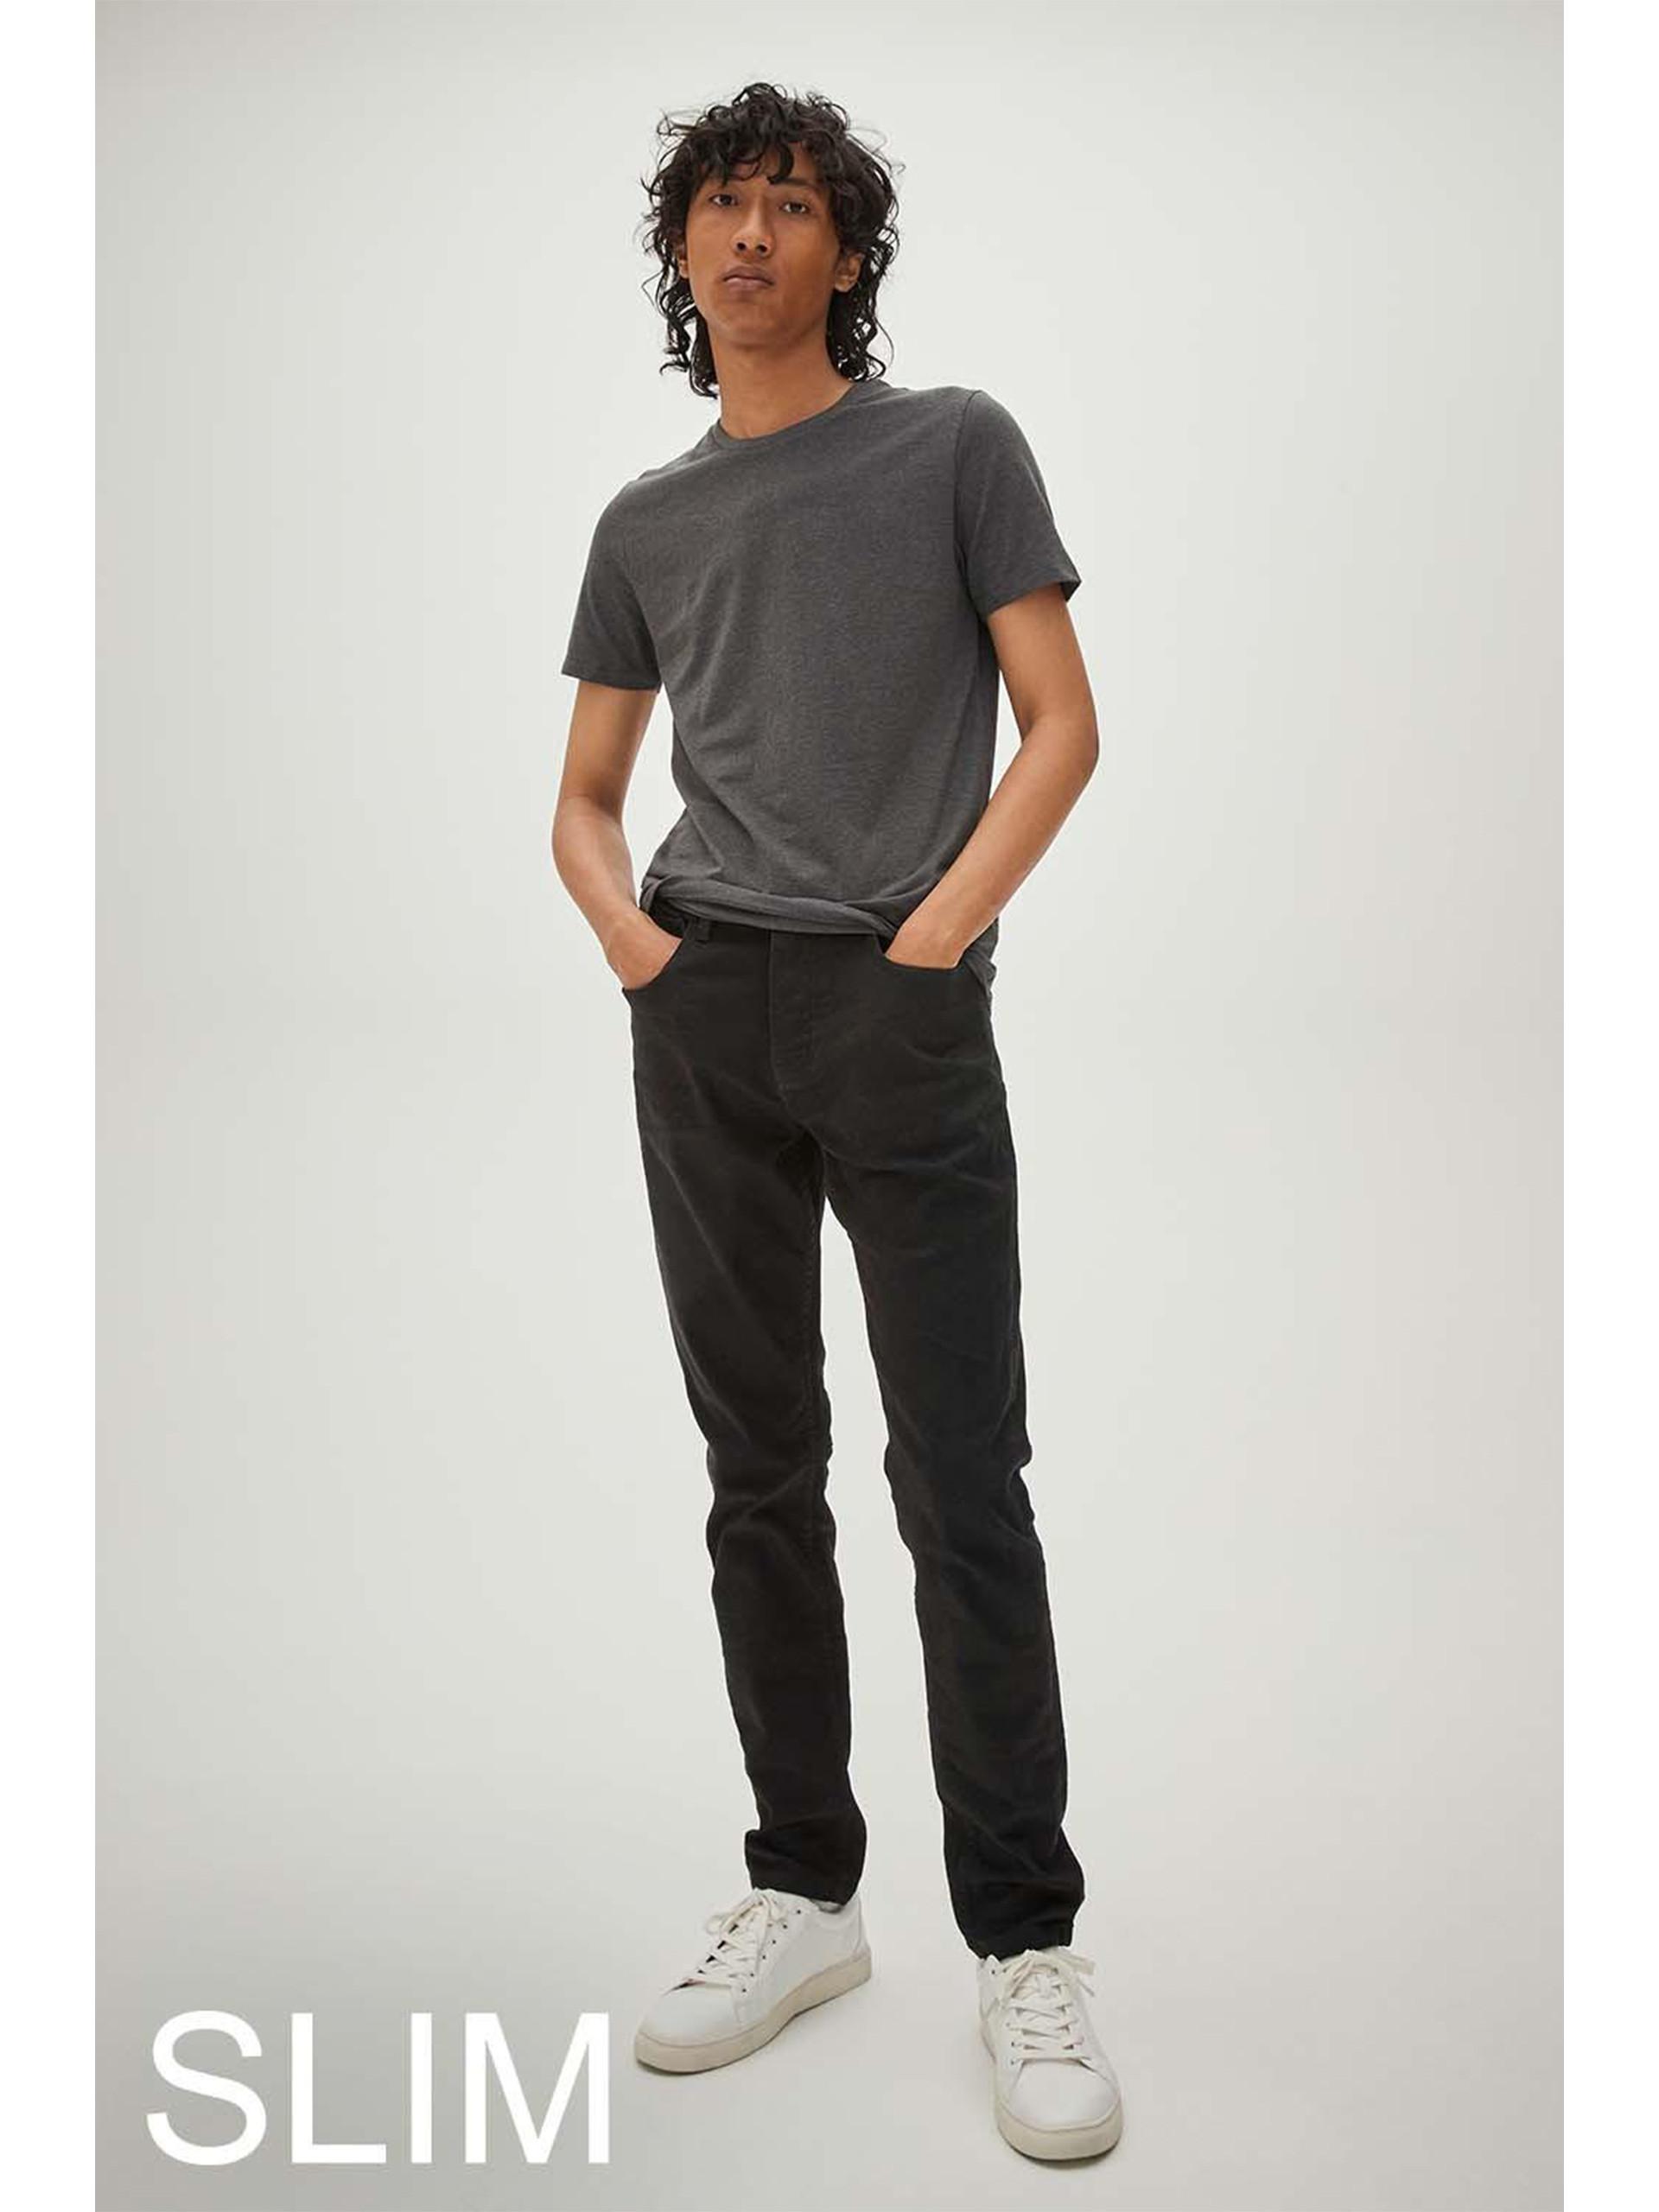 Model wears black slim denim jeans